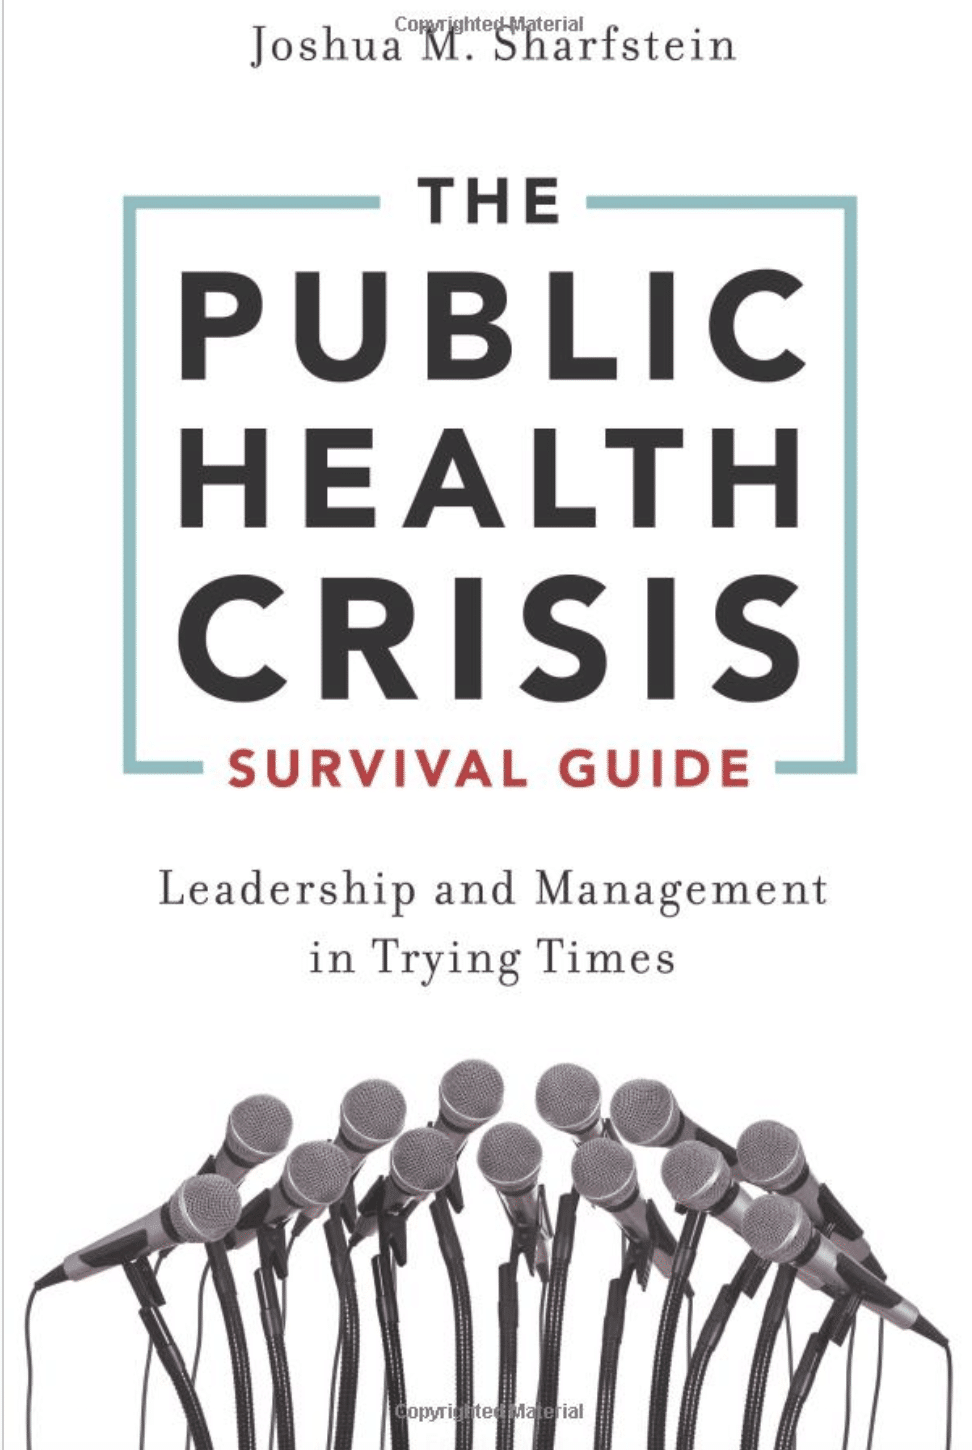 https://global.oup.com/academic/product/the-public-health-crisis-survival-guide-9780190697211?q=The%20Public%20Health%20Crisis%20Survival%20Guide&lang=en&cc=gb